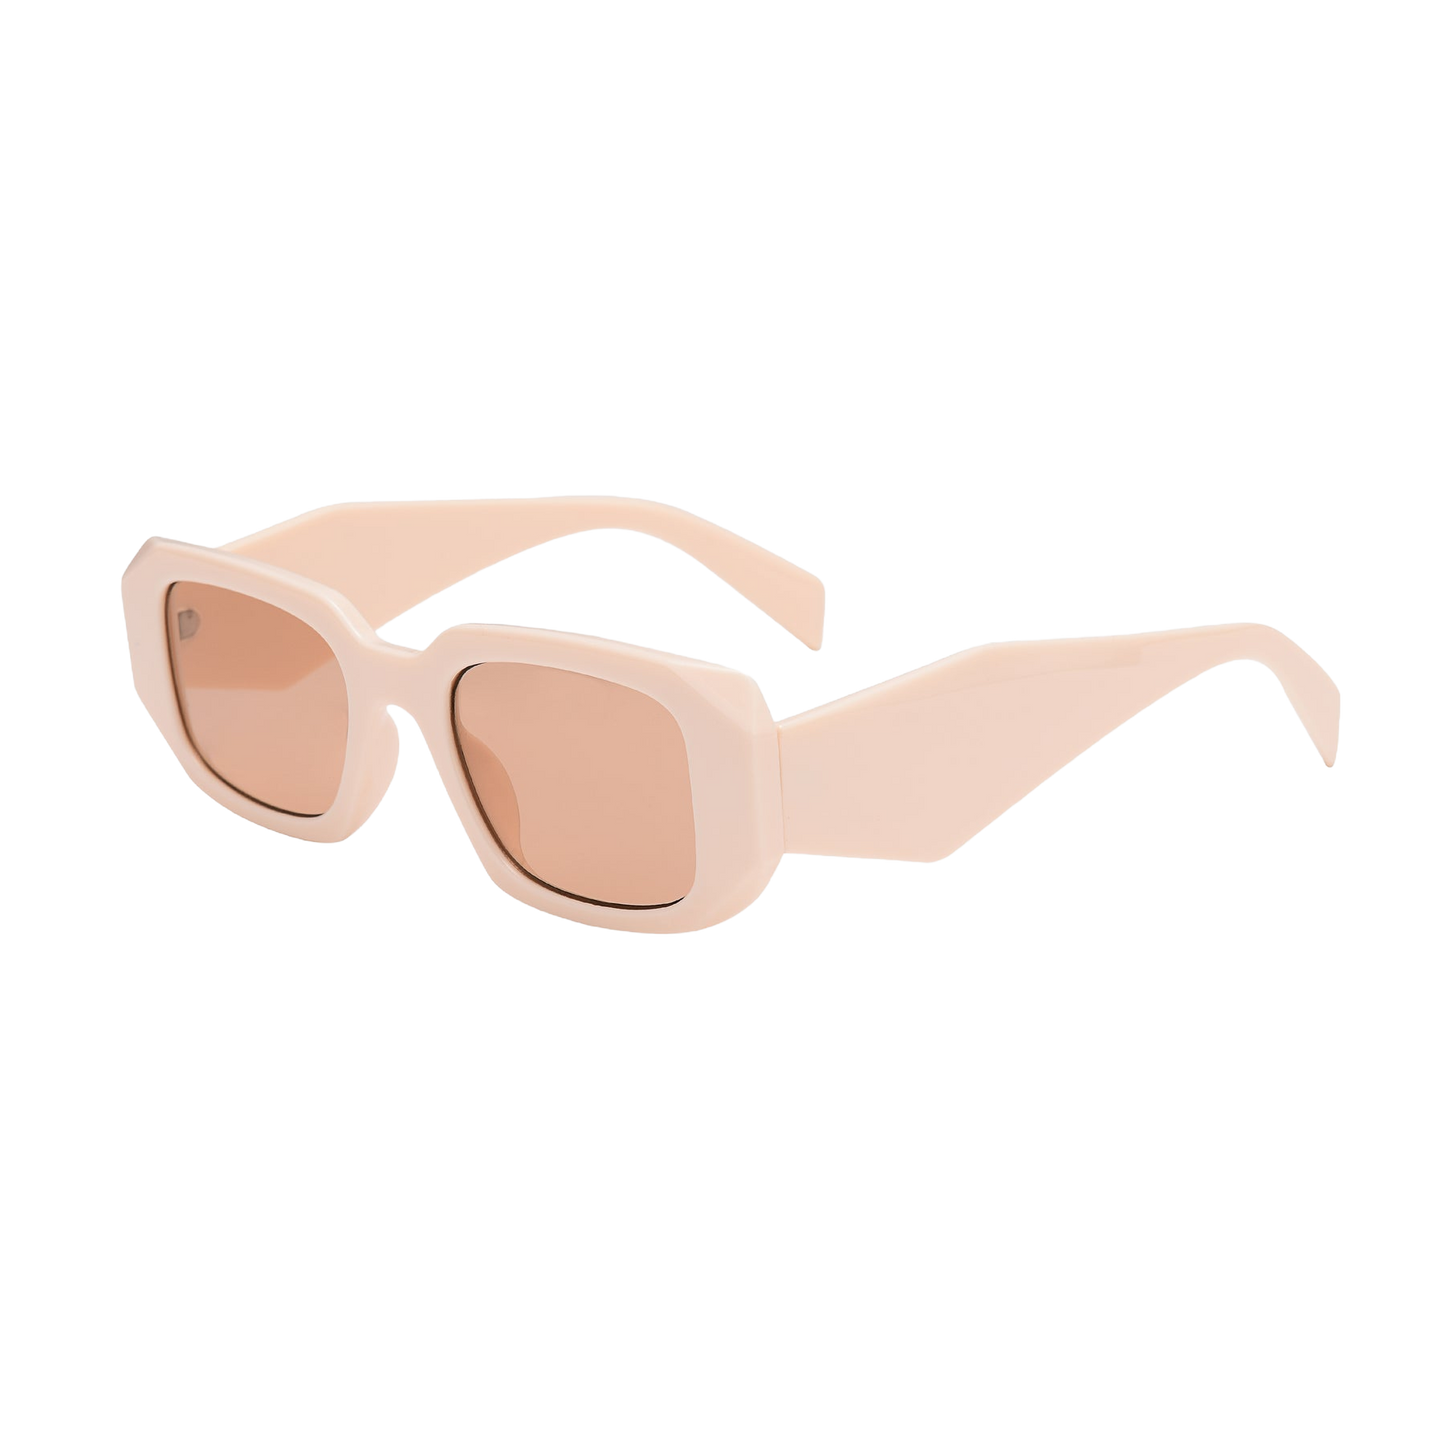 Monaco Sunglasses beige frame beige lens festival fashion